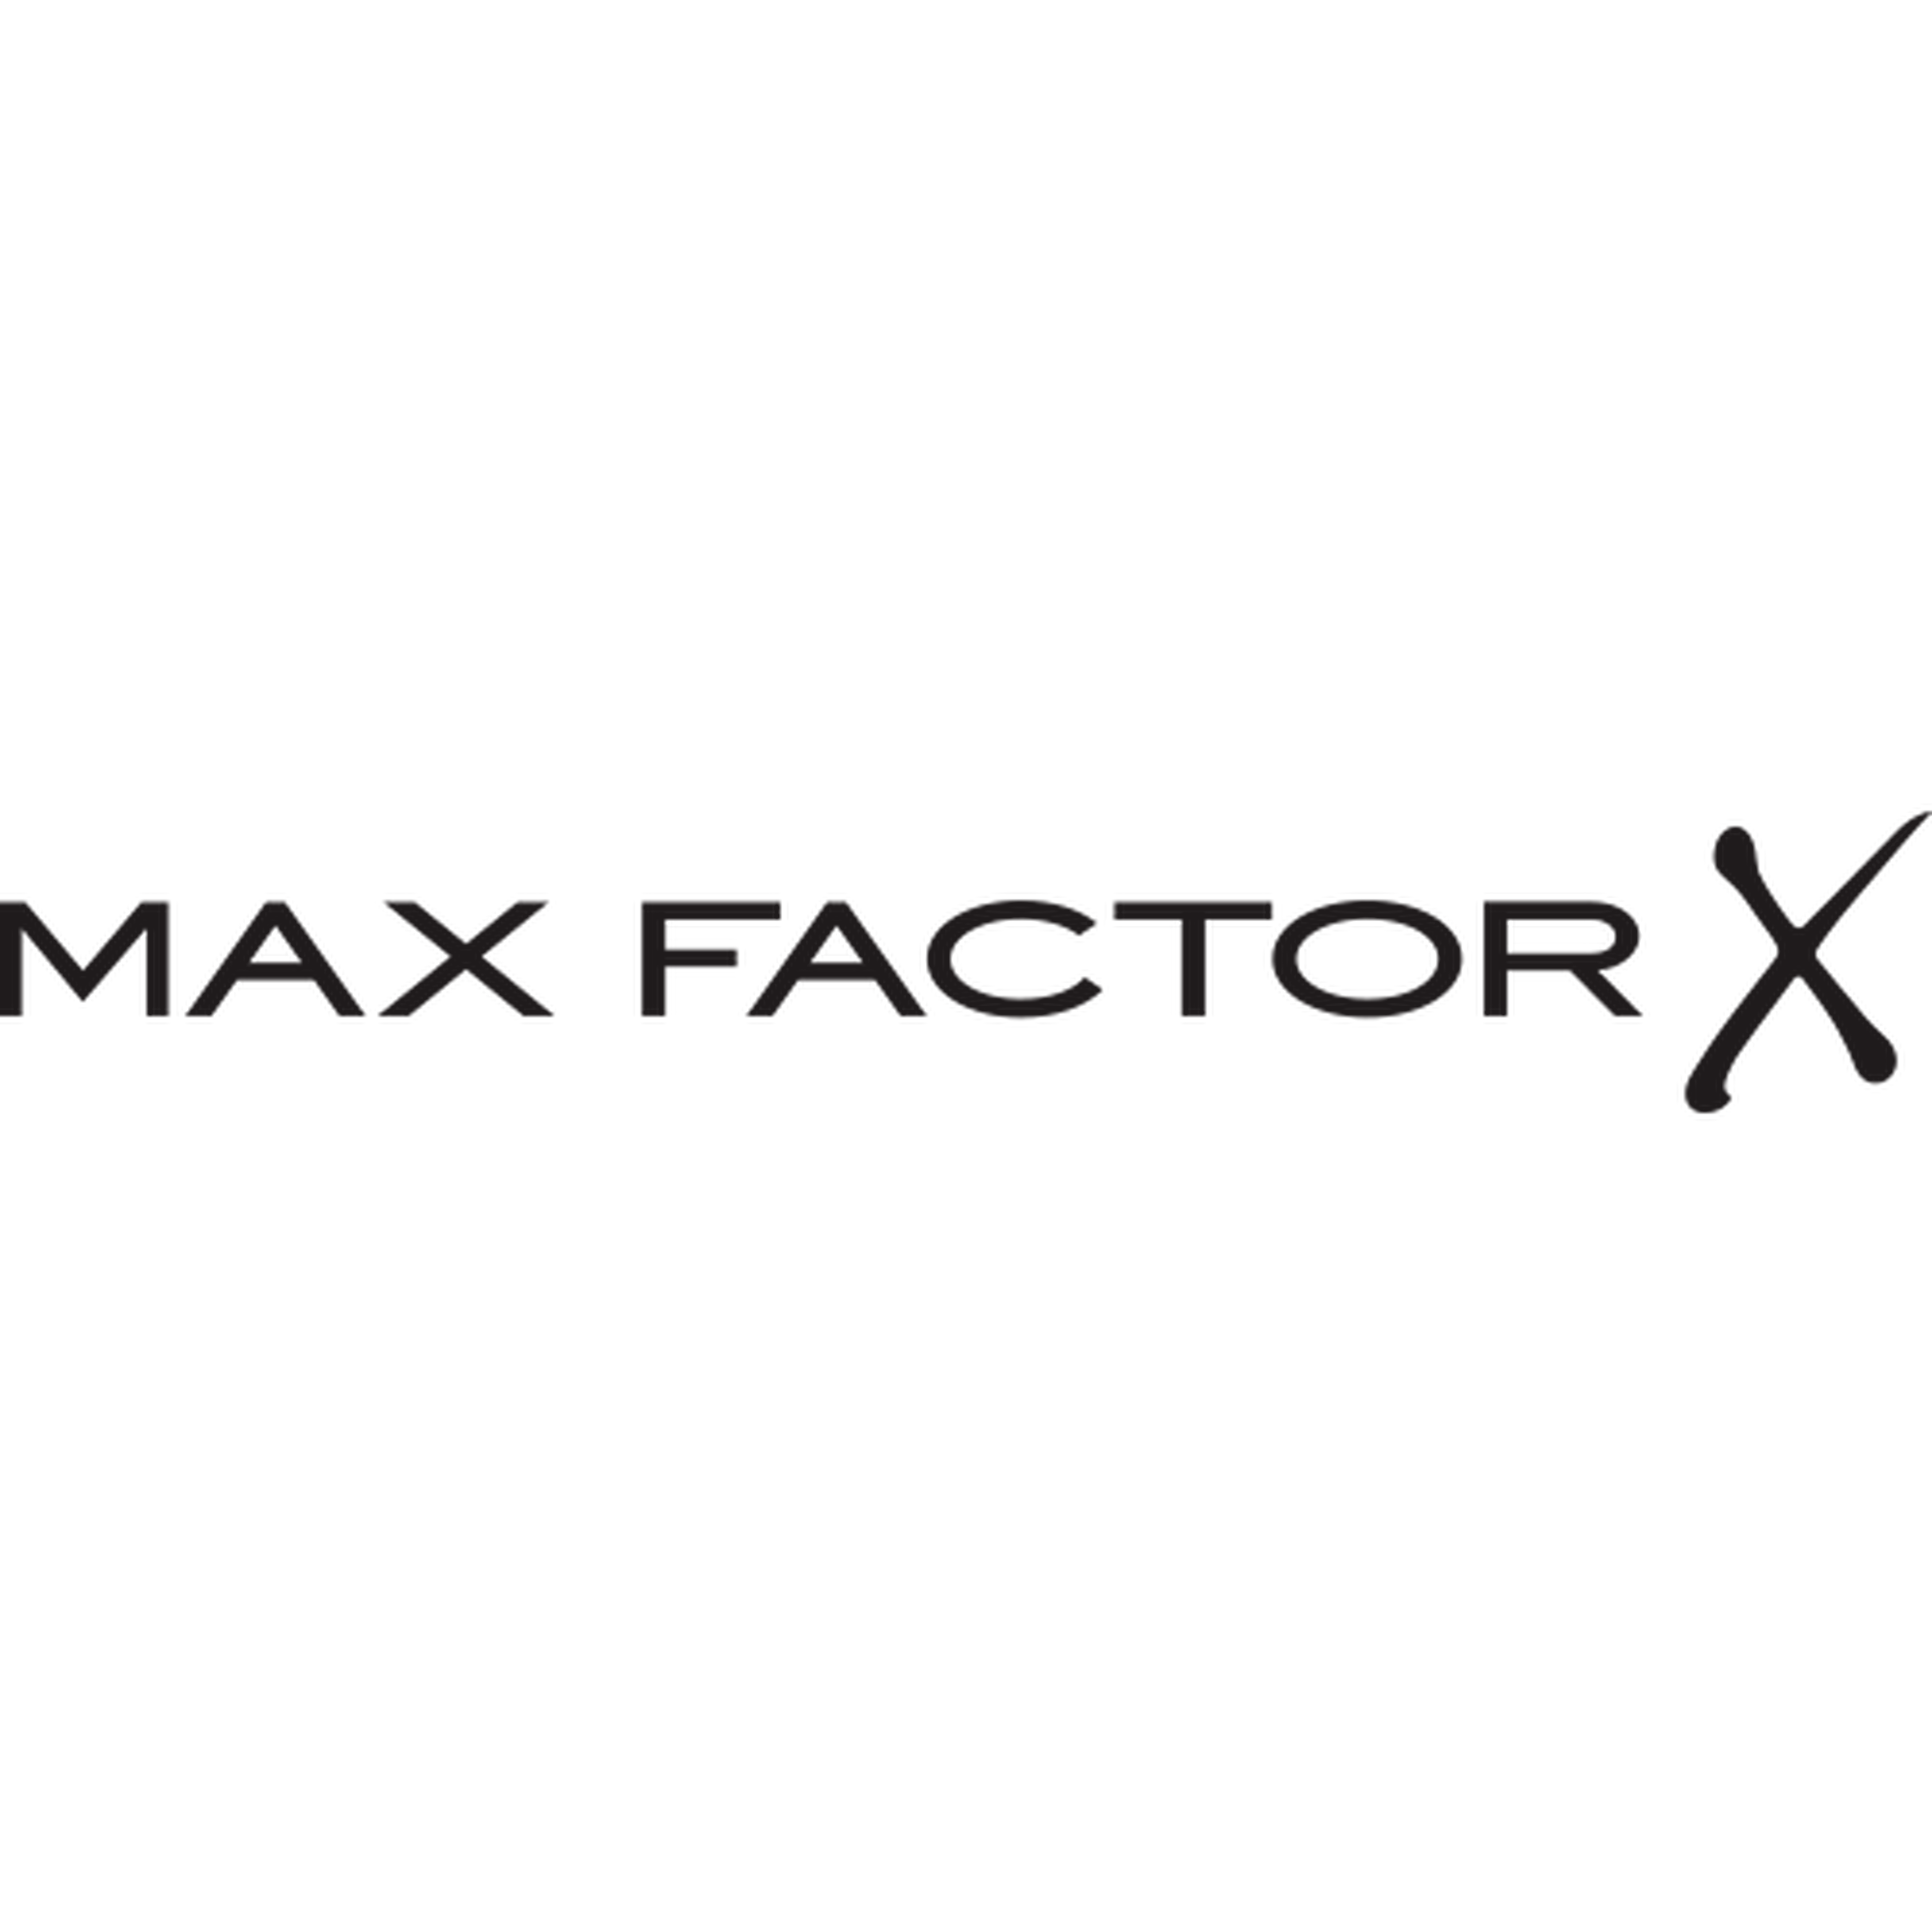 Max Factor logotype